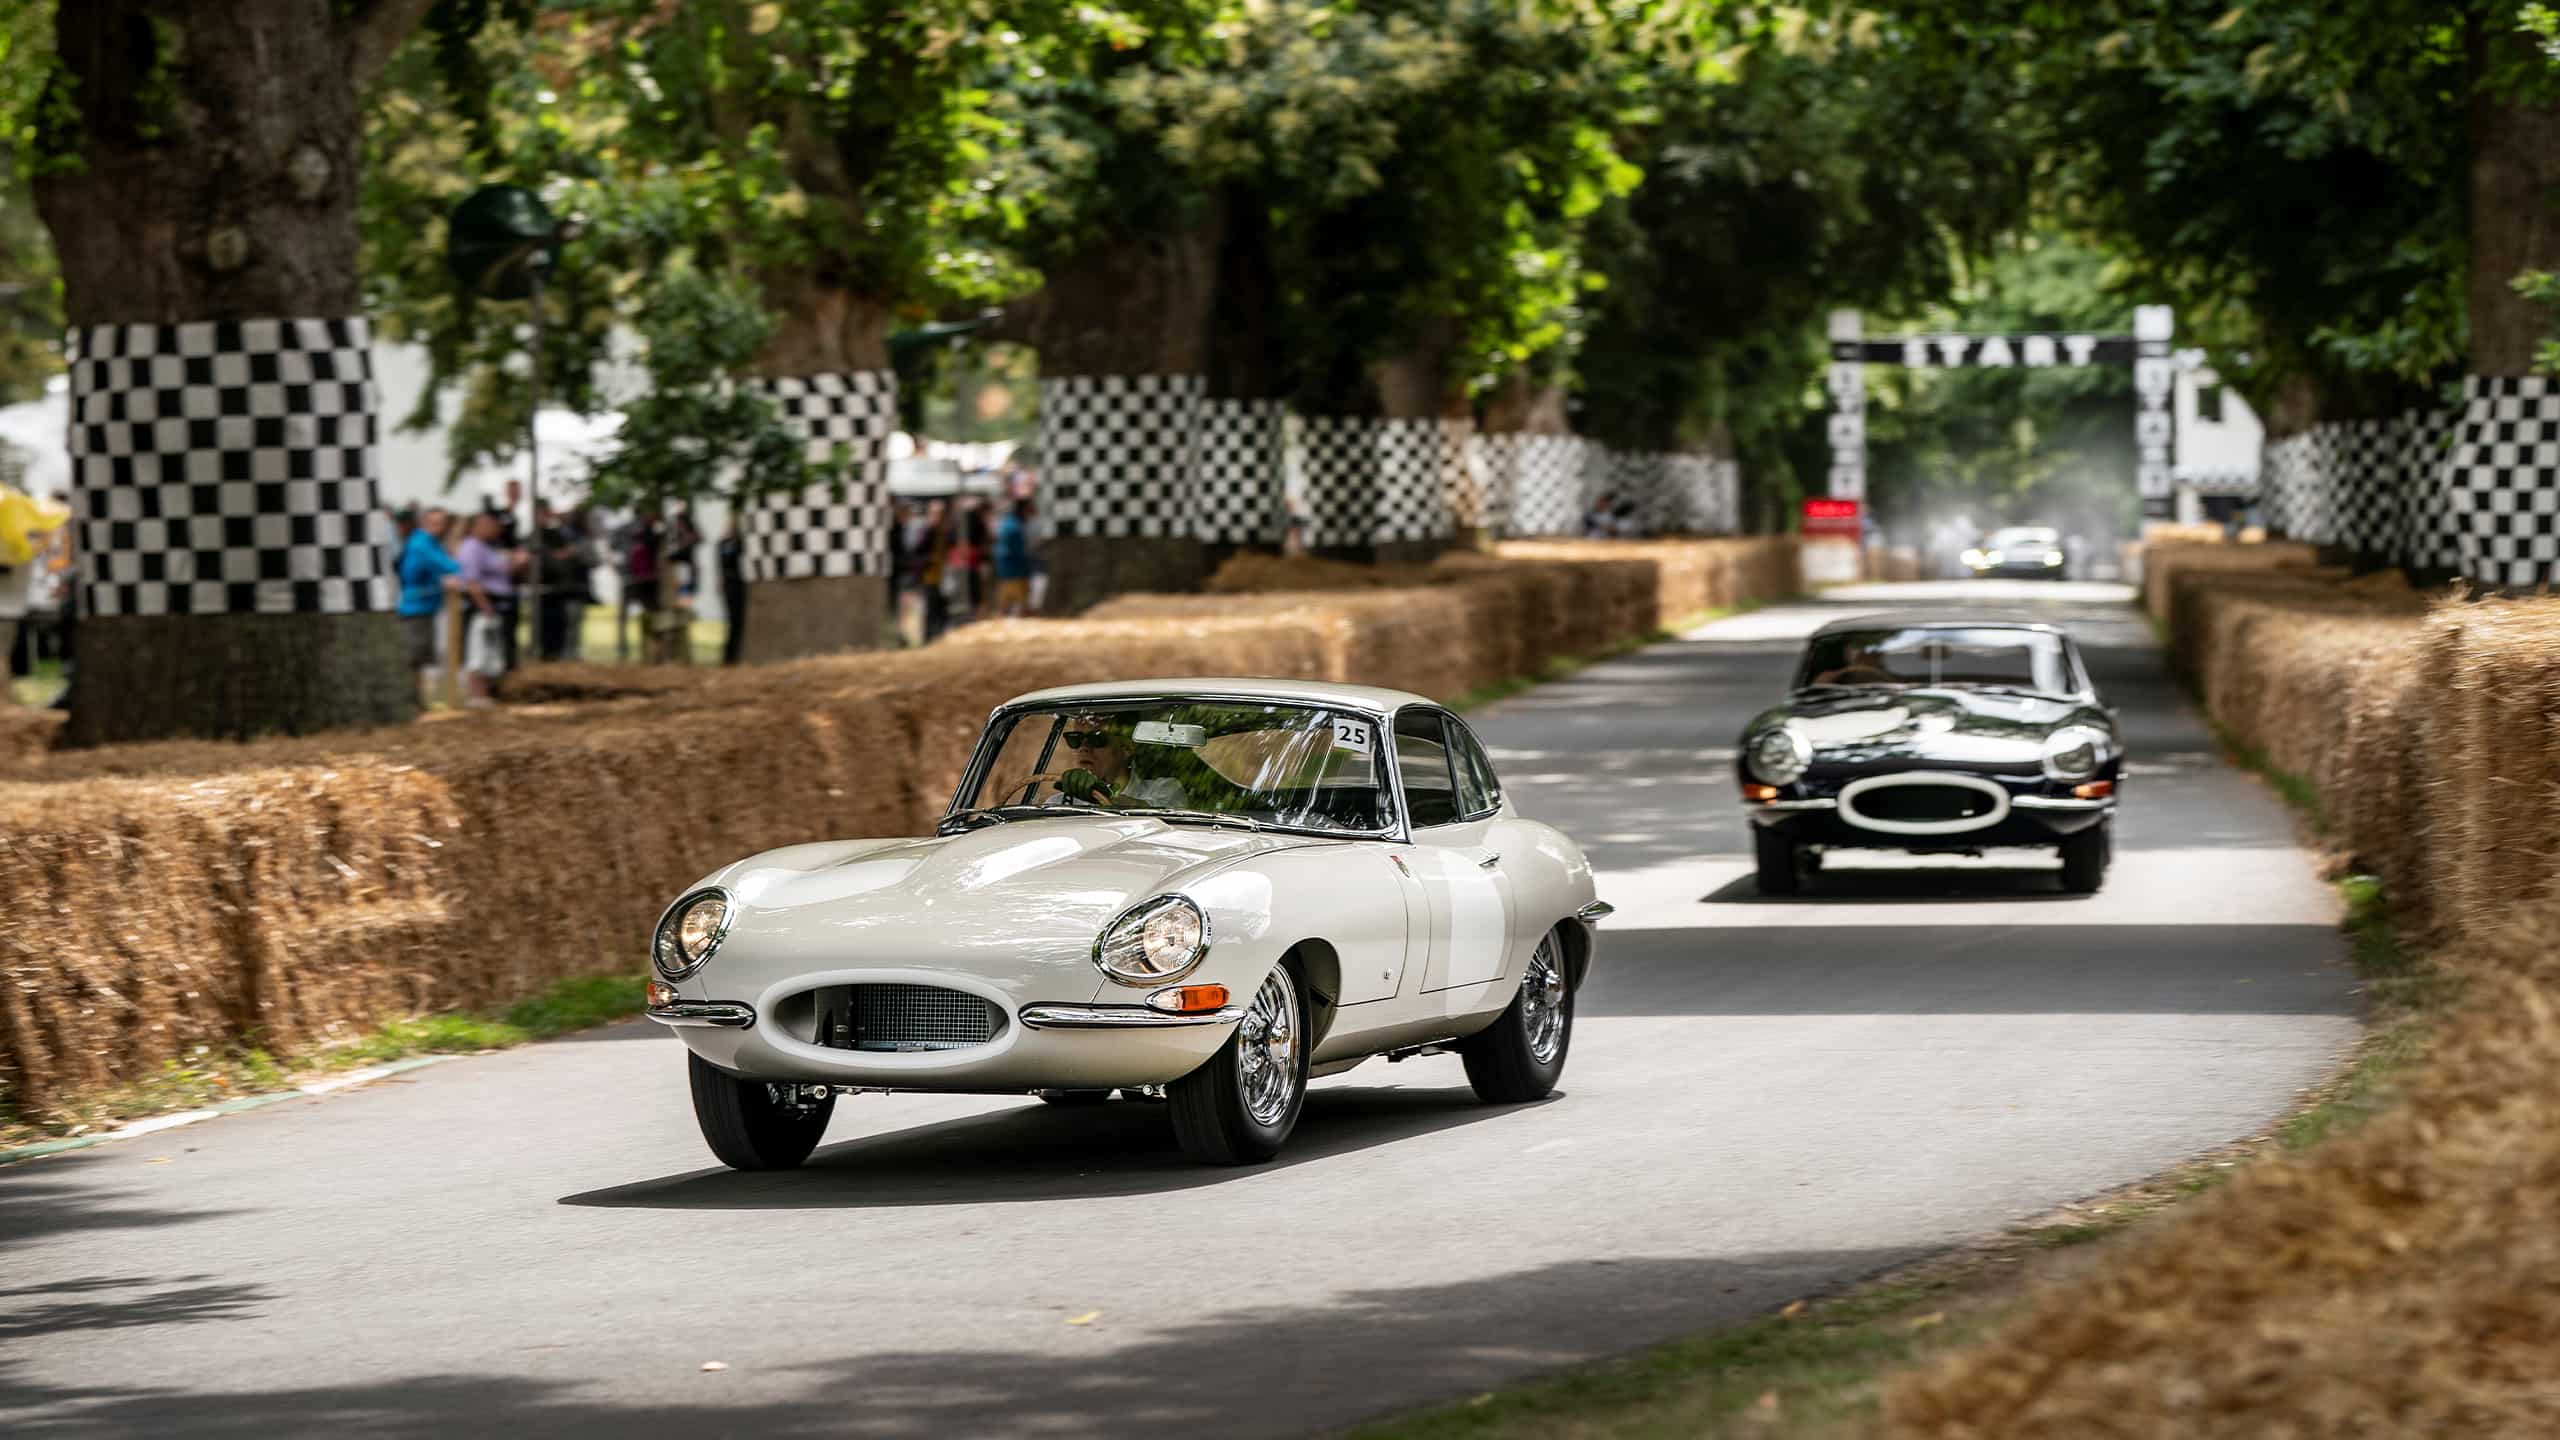 Two Jaguar Vintage Cars on the racetrack